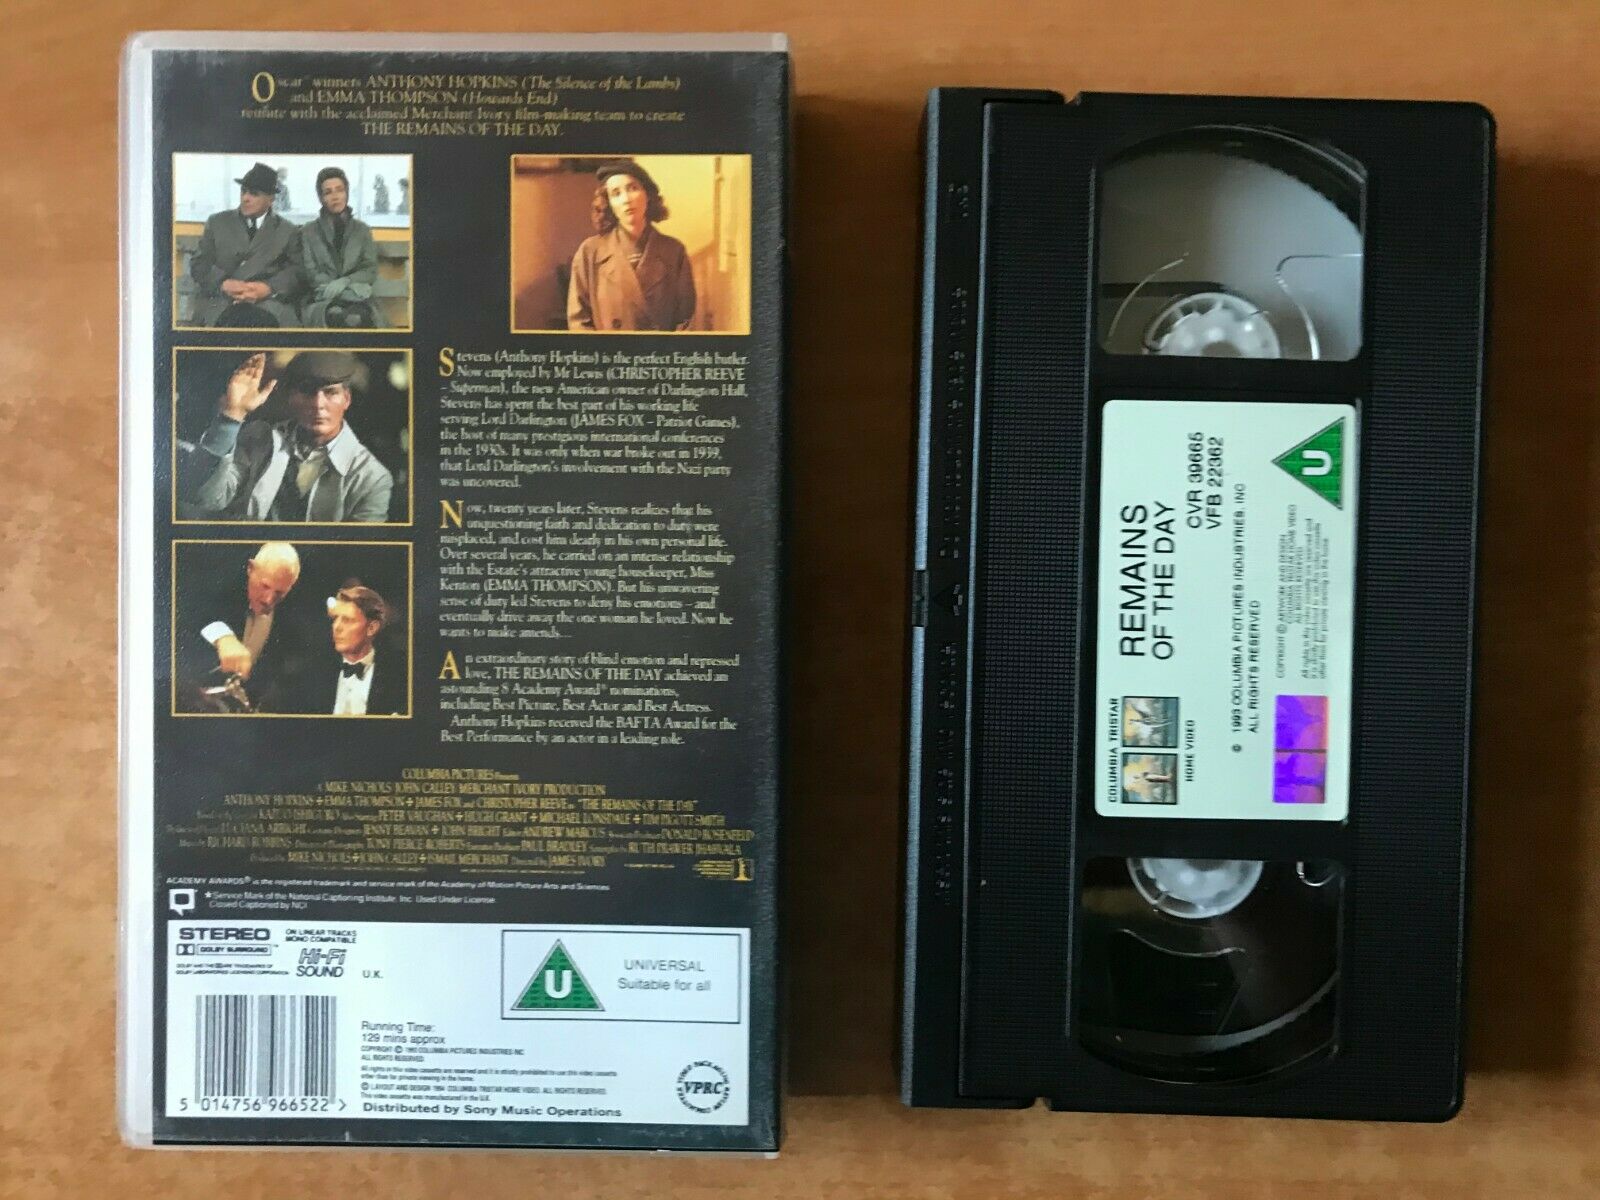 Remains Of The Day (1993): Drama - Anthony Hopkins / Emma Thompson - Pal VHS-